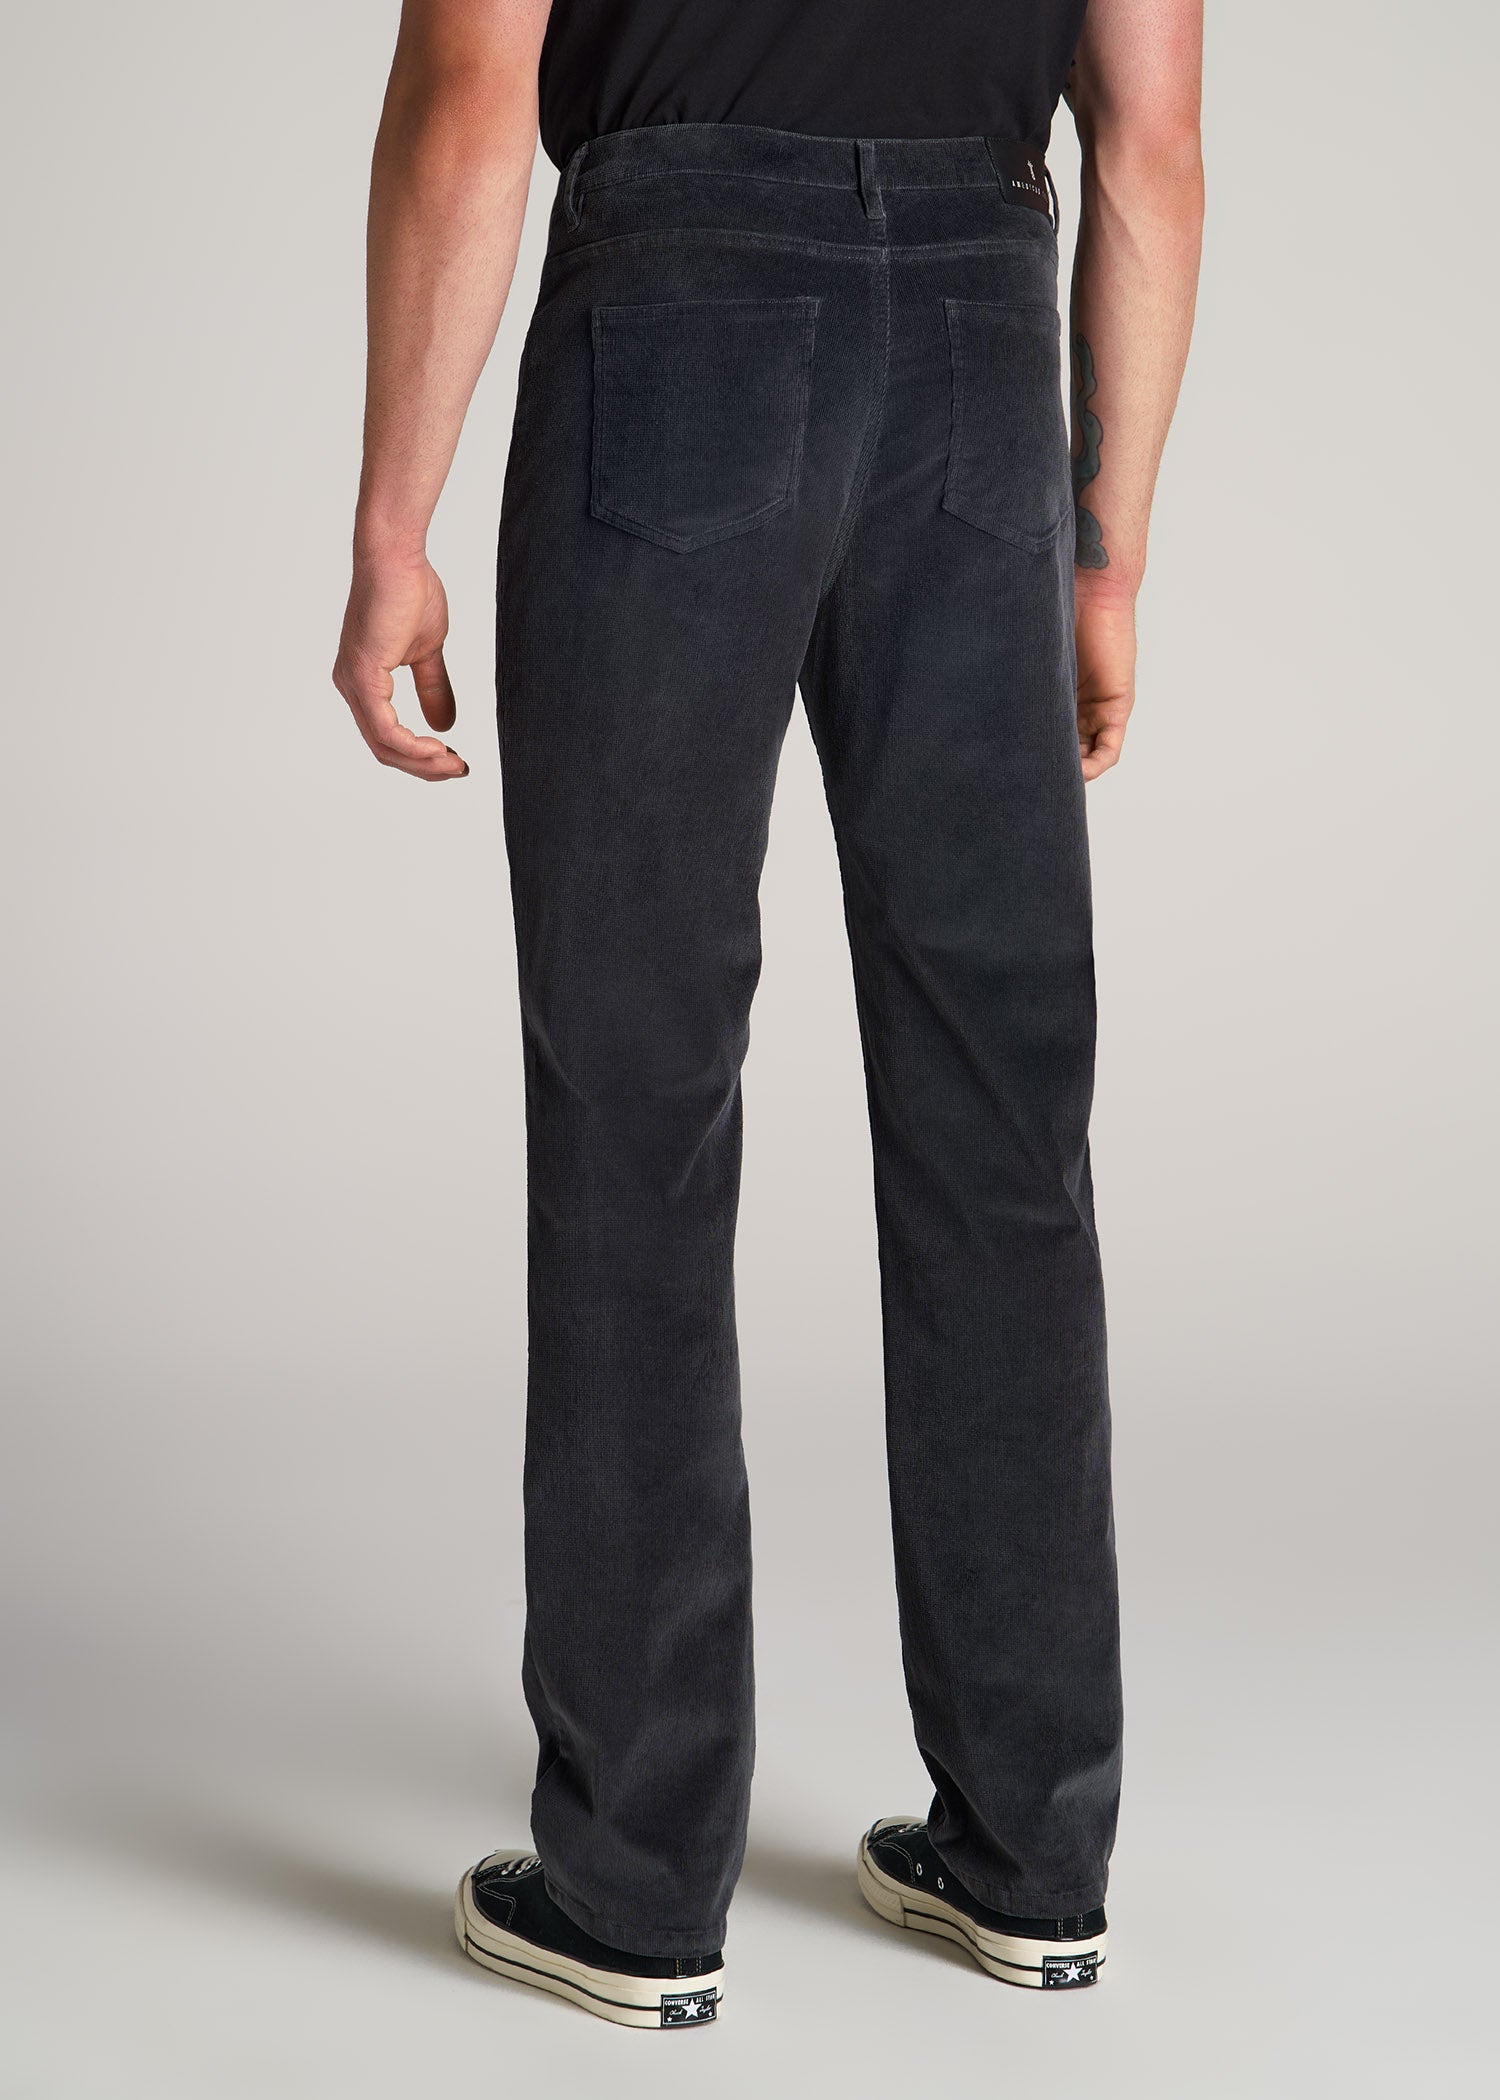 Buy KingSize Men's Big & Tall Six-Wale Corduroy Plain Front Pants - Tall -  46 40, Khaki at Amazon.in